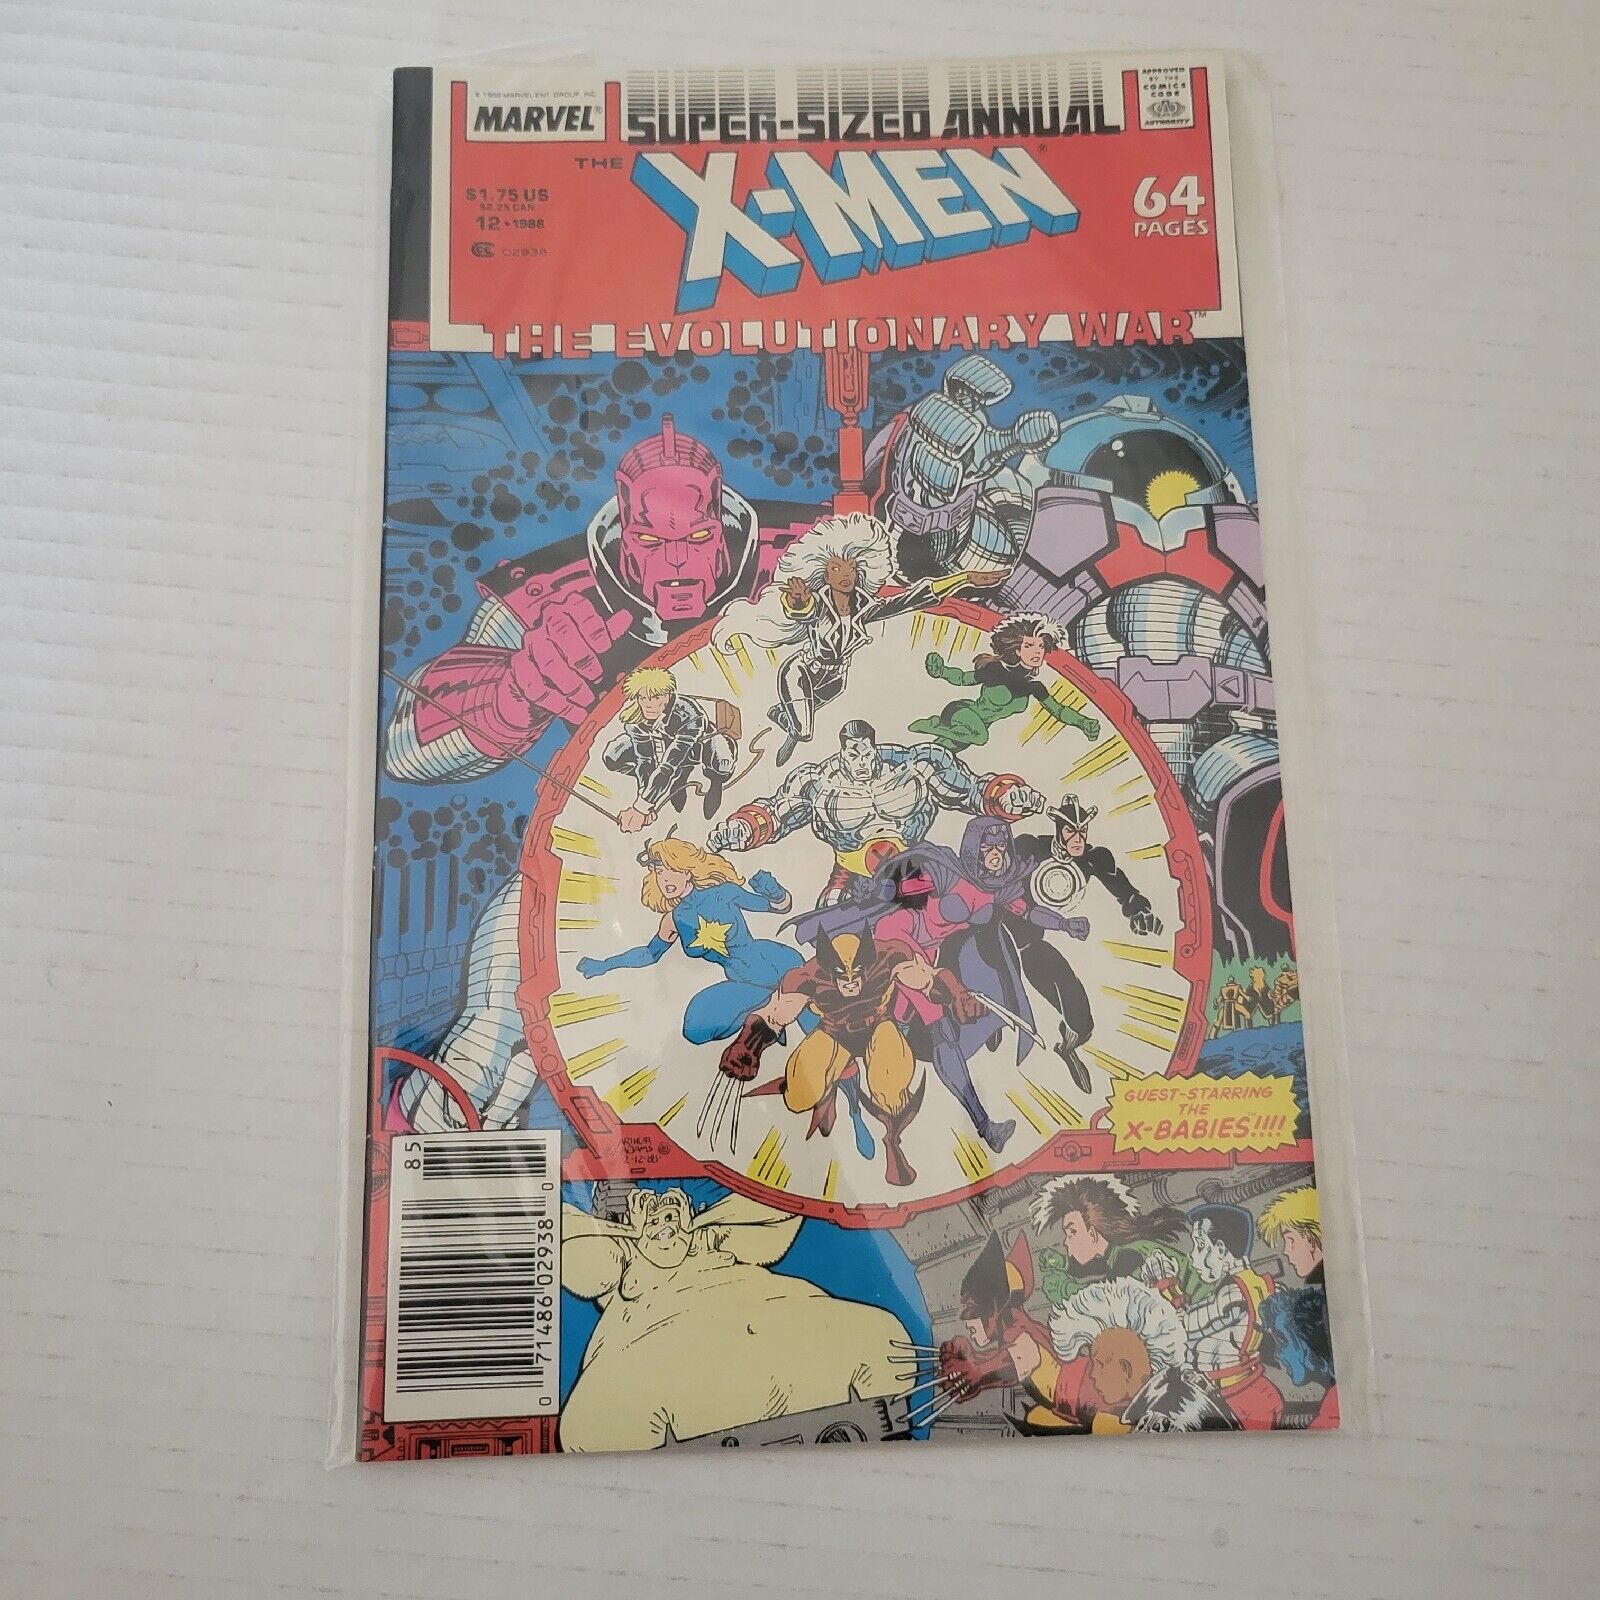 NEW - X-Men Super Sized Annual Vol #12 1988 The Evolutionary War Marvel Comics